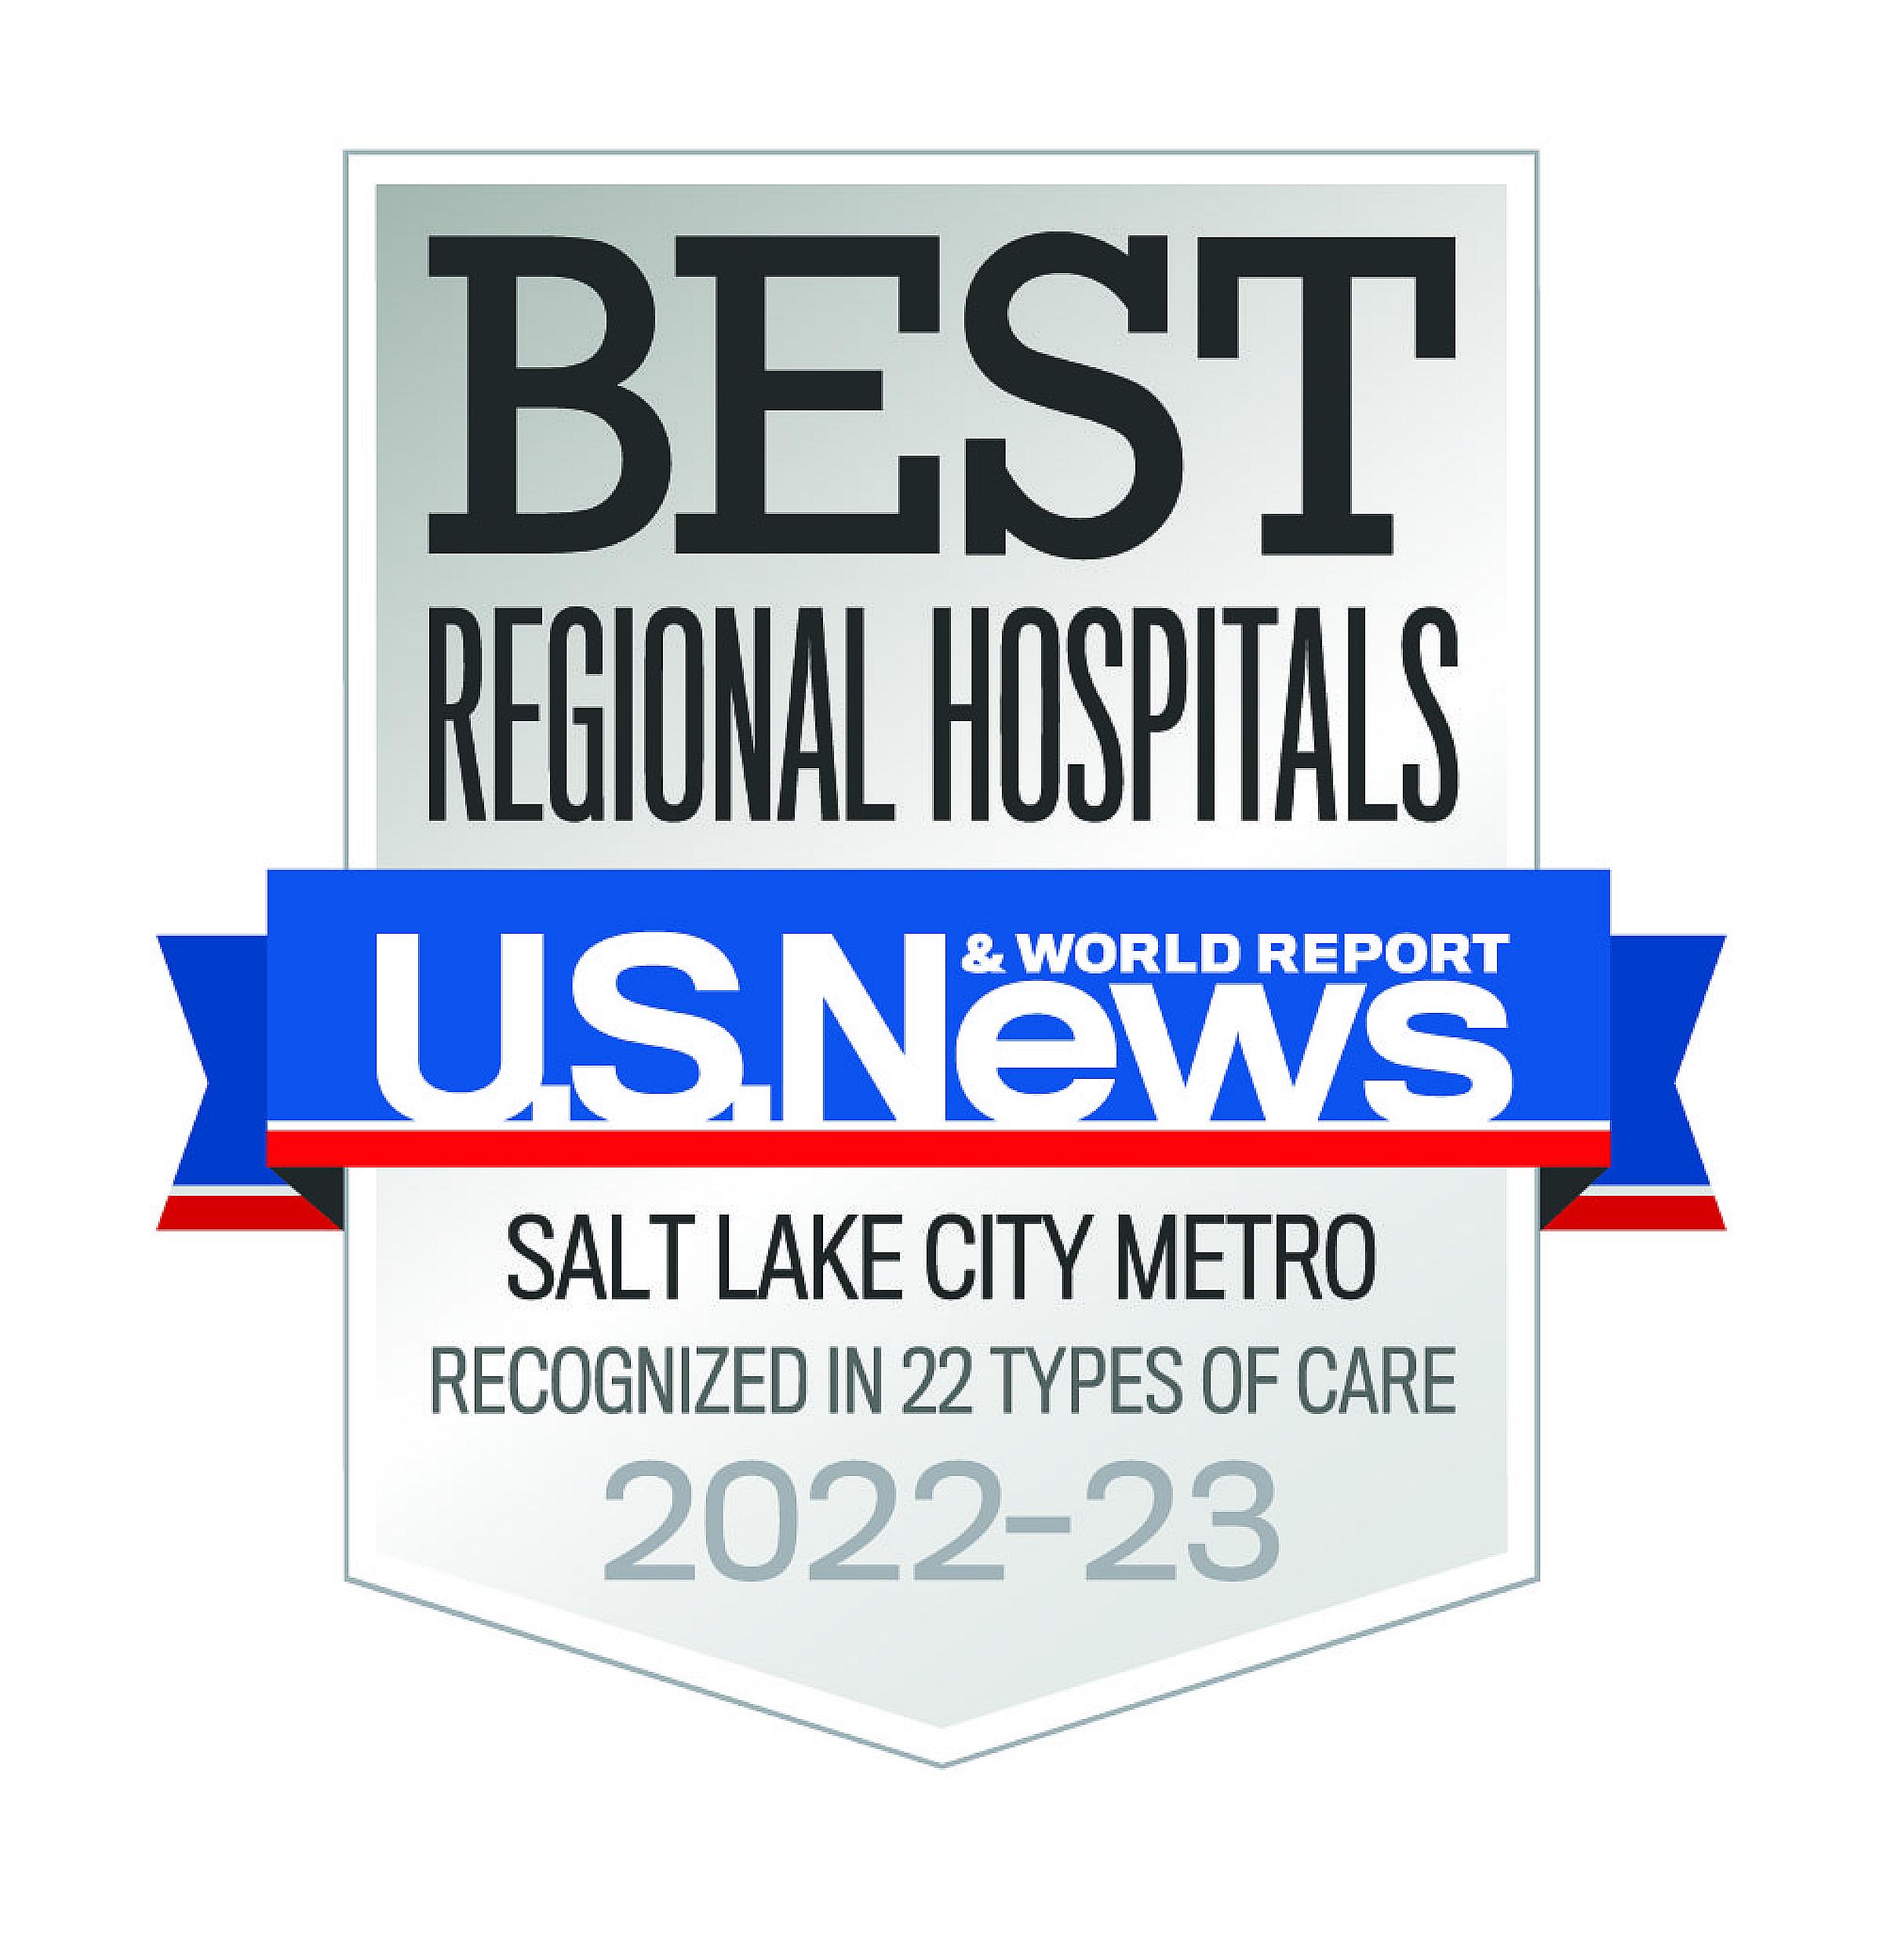 Best regional hospital 2022-2023 University of Utah Hospital, US News & World Report badge